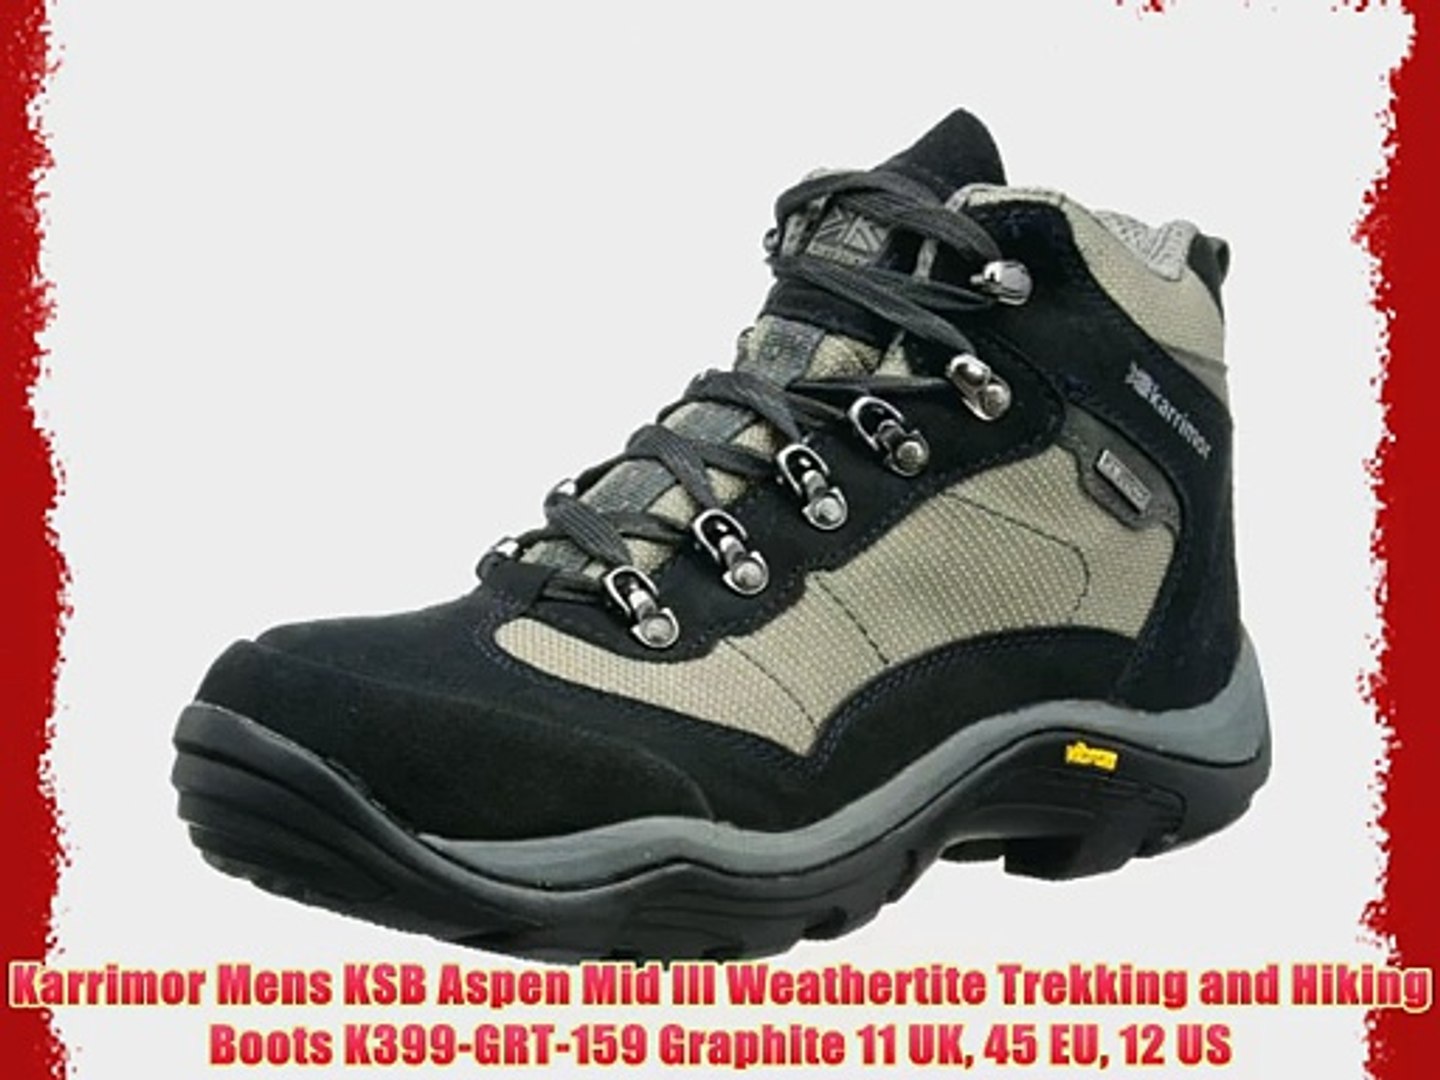 Karrimor Mens KSB Aspen Mid lll Weathertite Trekking and Hiking Boots  K399-GRT-159 Graphite - video Dailymotion